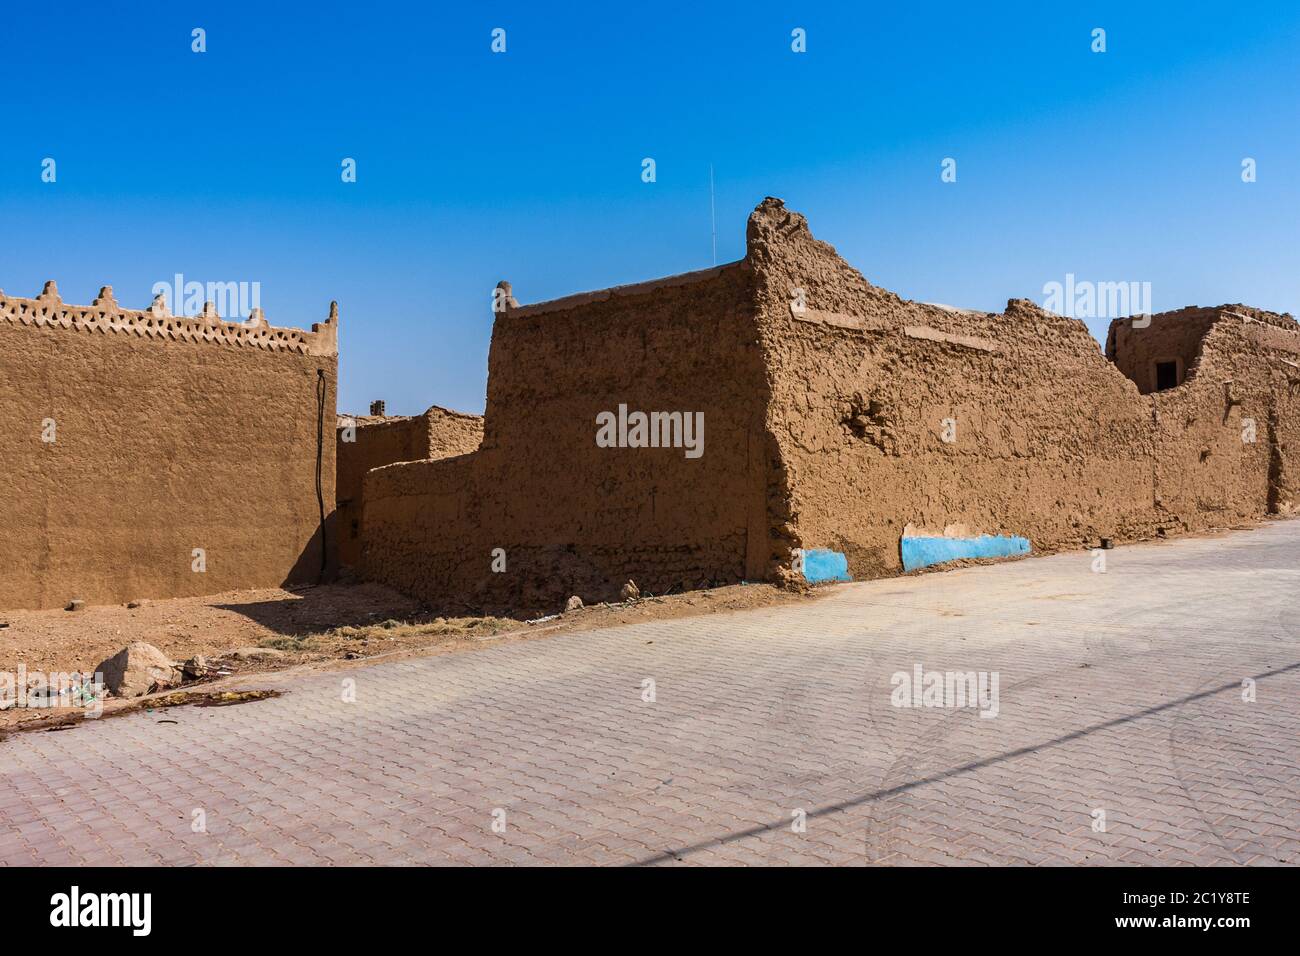 Traditional Arab mud brick architecture in Al Majmaah, Saudi Arabia Stock Photo